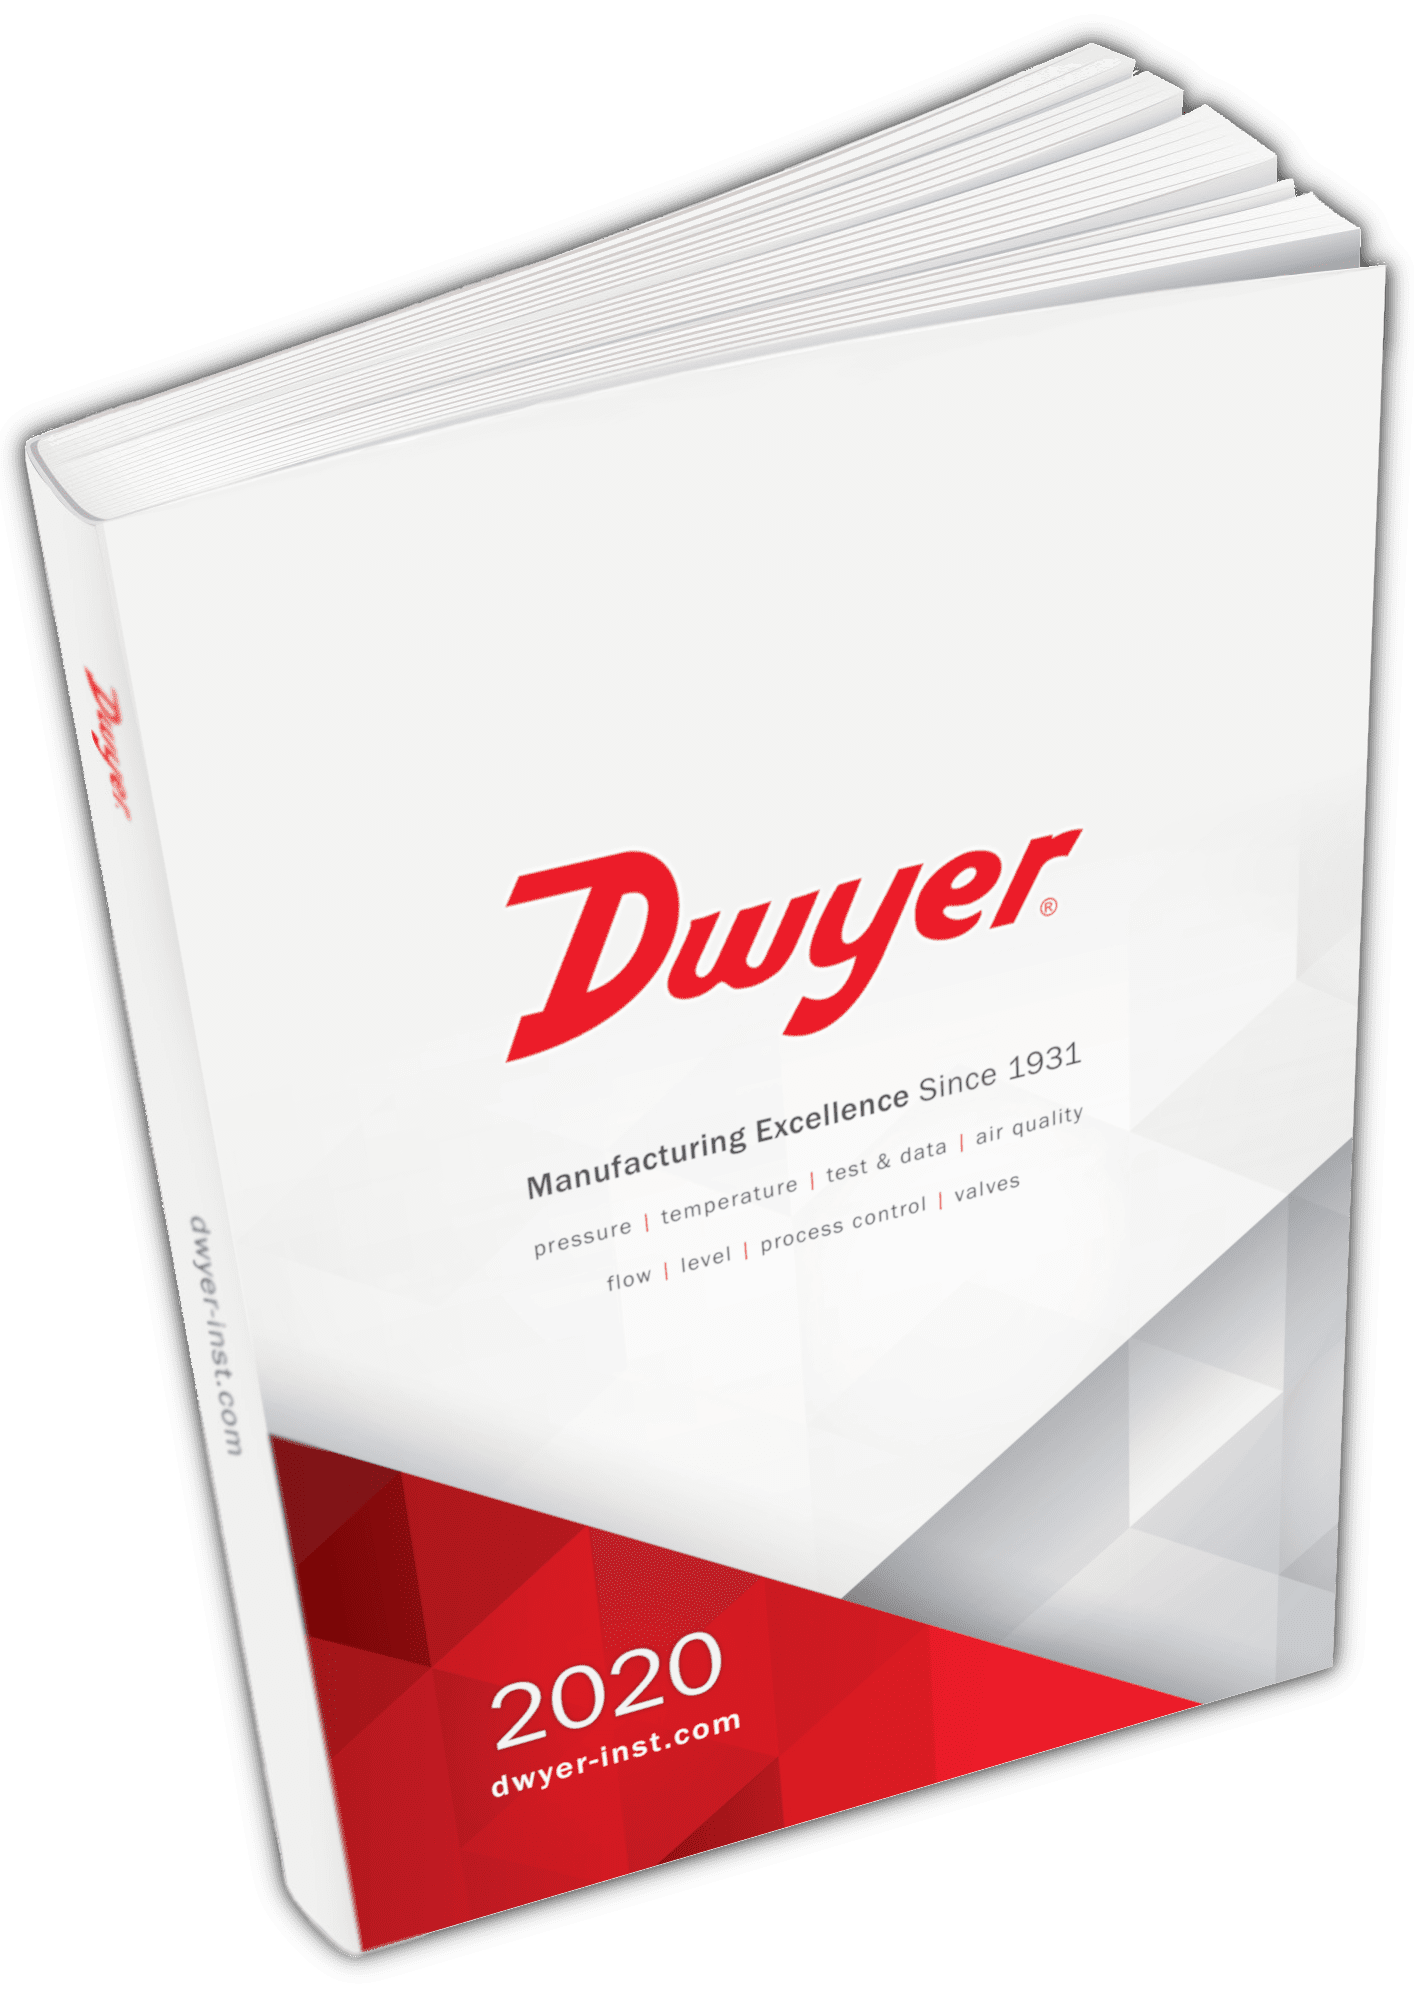 Dwyer-catalogus 2020 bij Hitma verkrijgbaar